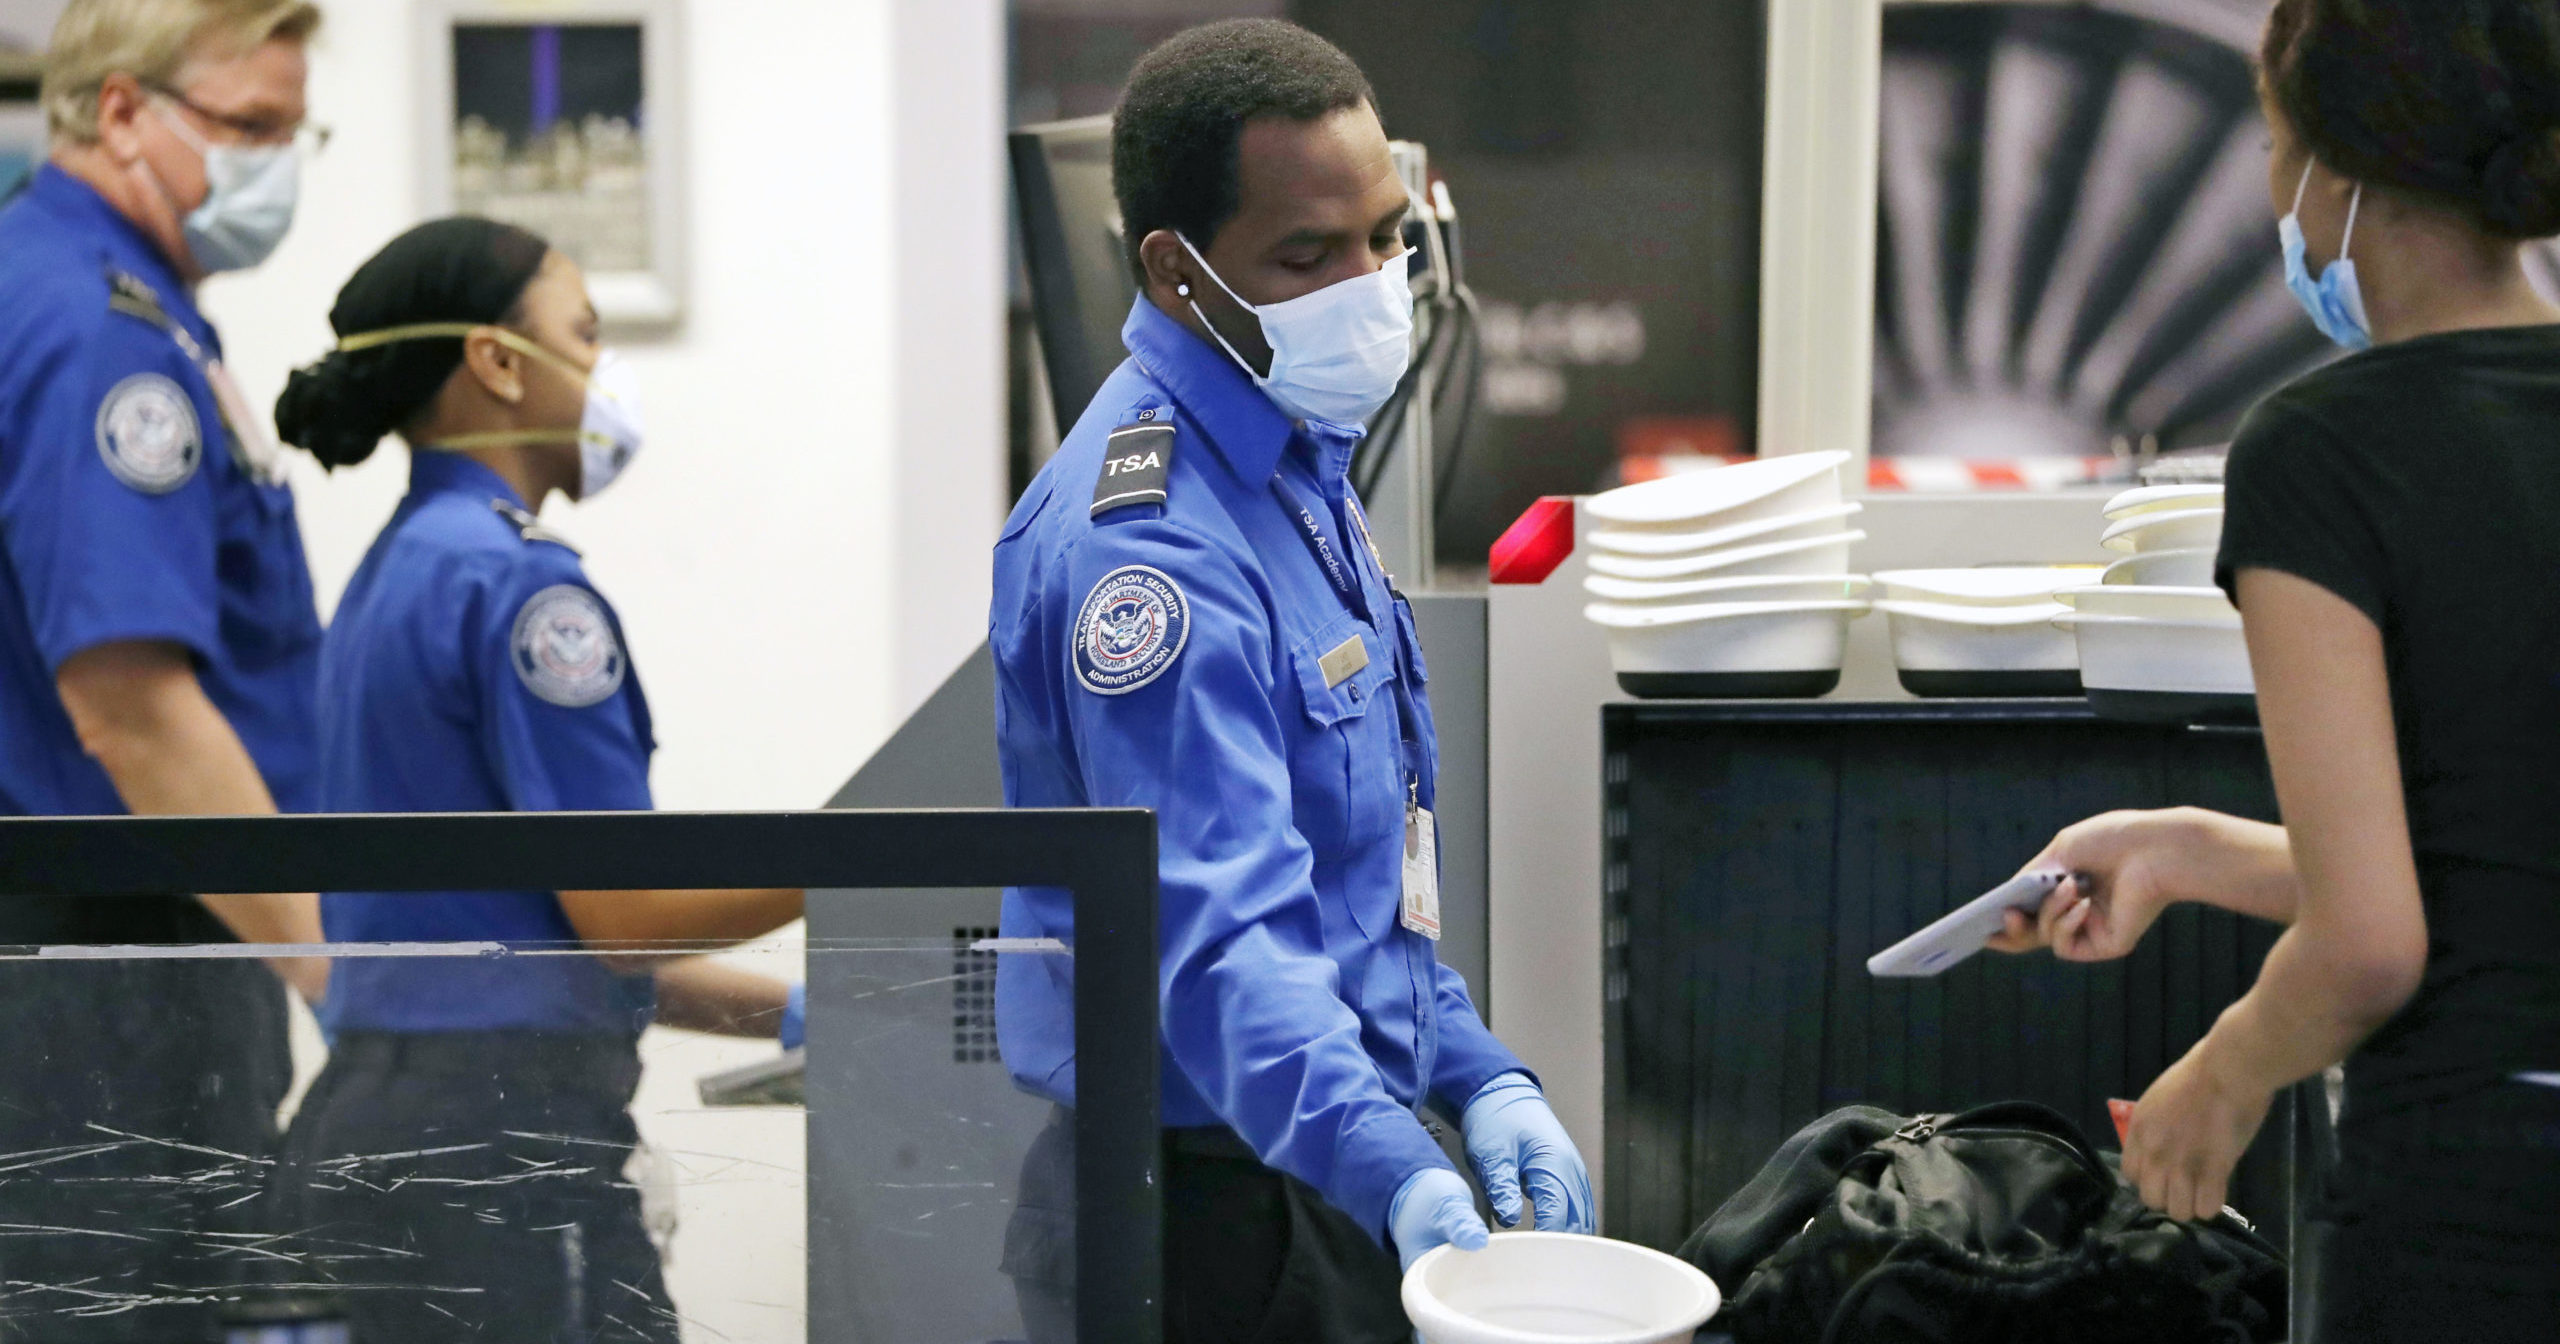 TSA officers wear protective masks at a security screening area at Seattle-Tacoma International Airport on May 18, 2020, in SeaTac, Washington.